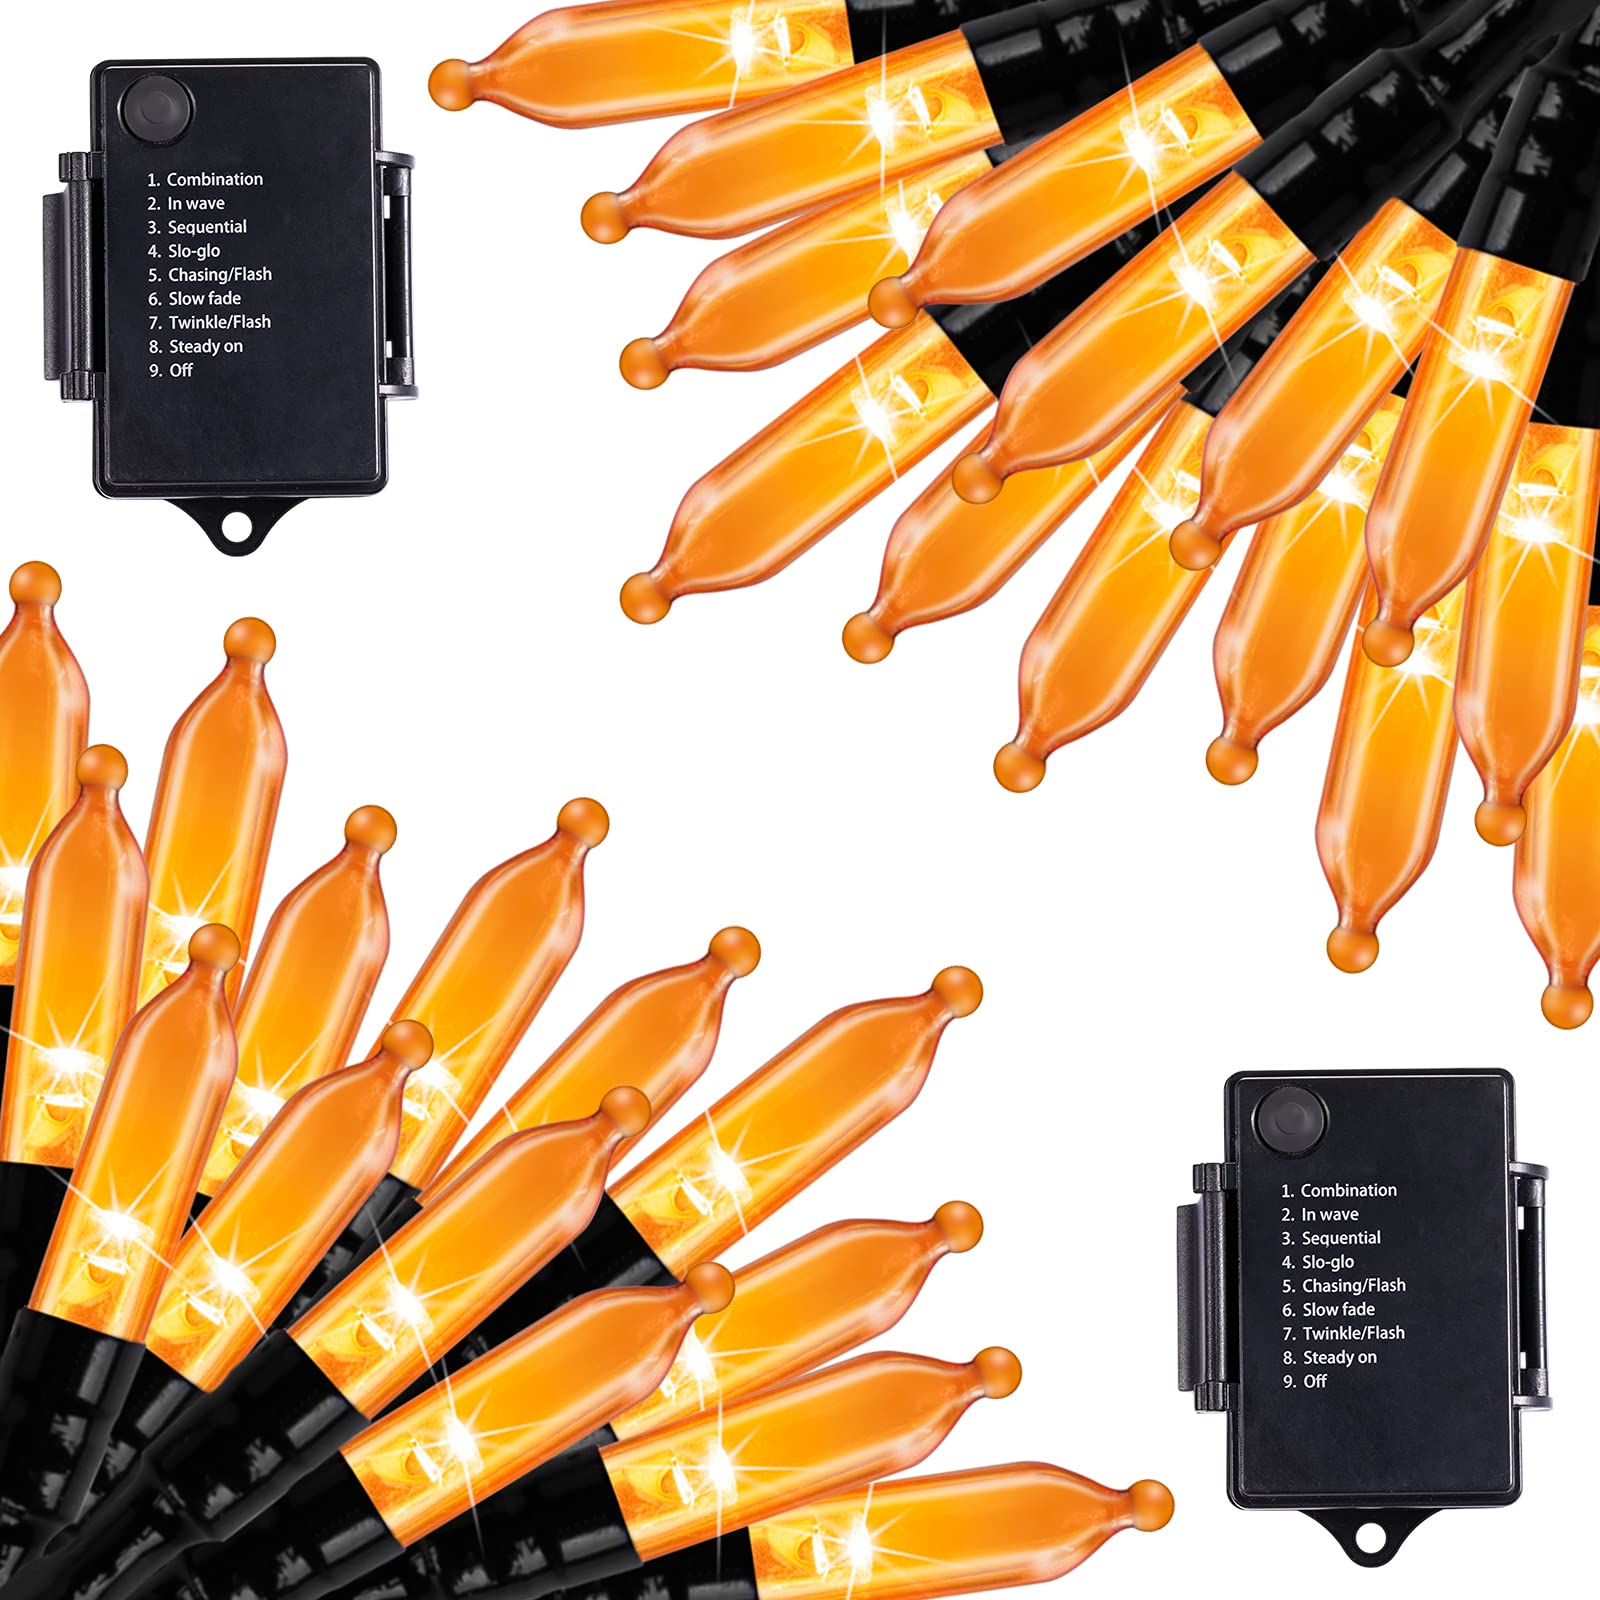 2 x 18 Feet / 50 LED / Orange / Black Wire